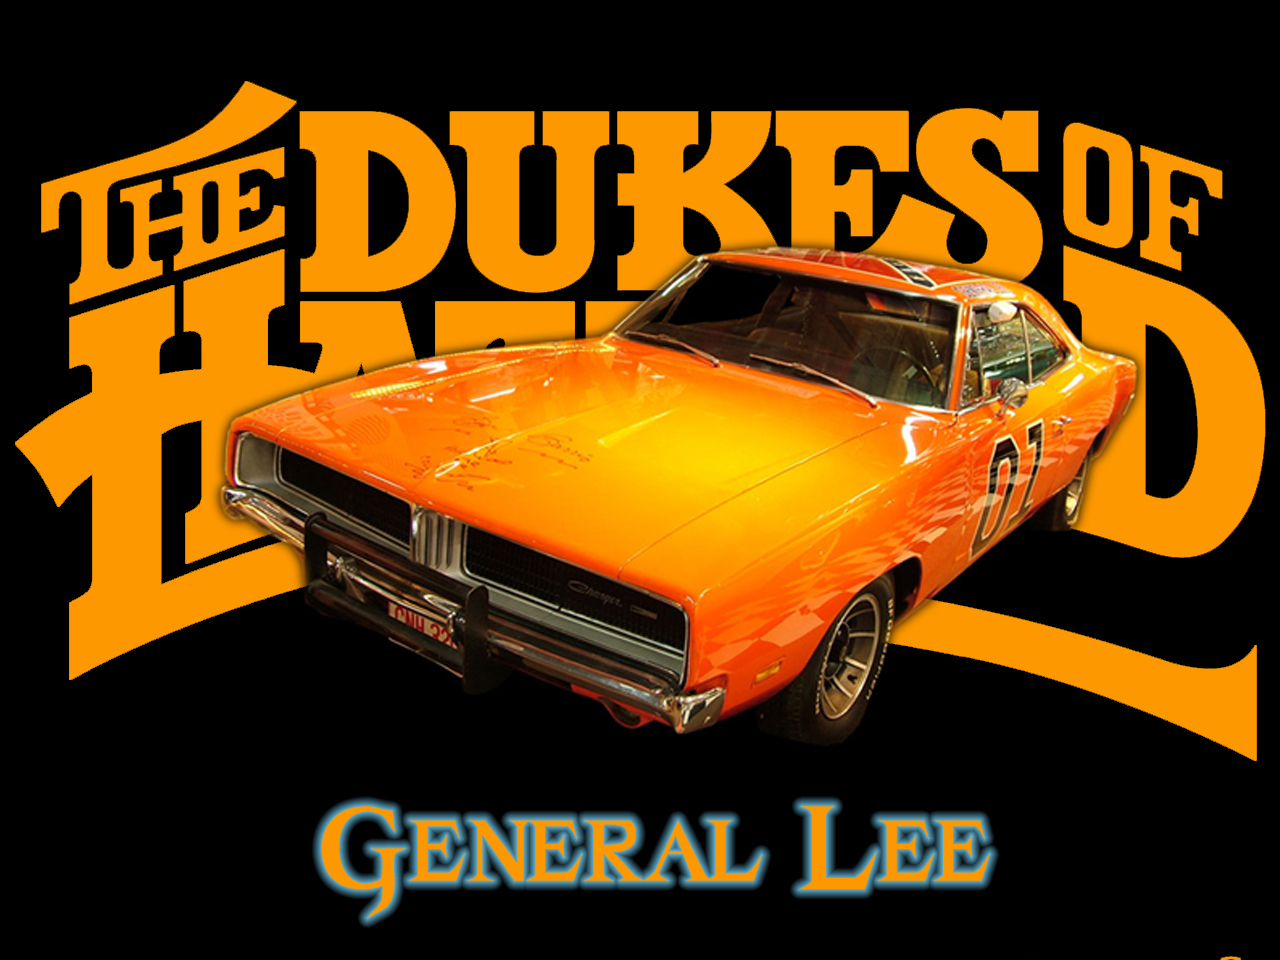 General Lee- Dukes of Hazzard by xxatwaxx on DeviantArt